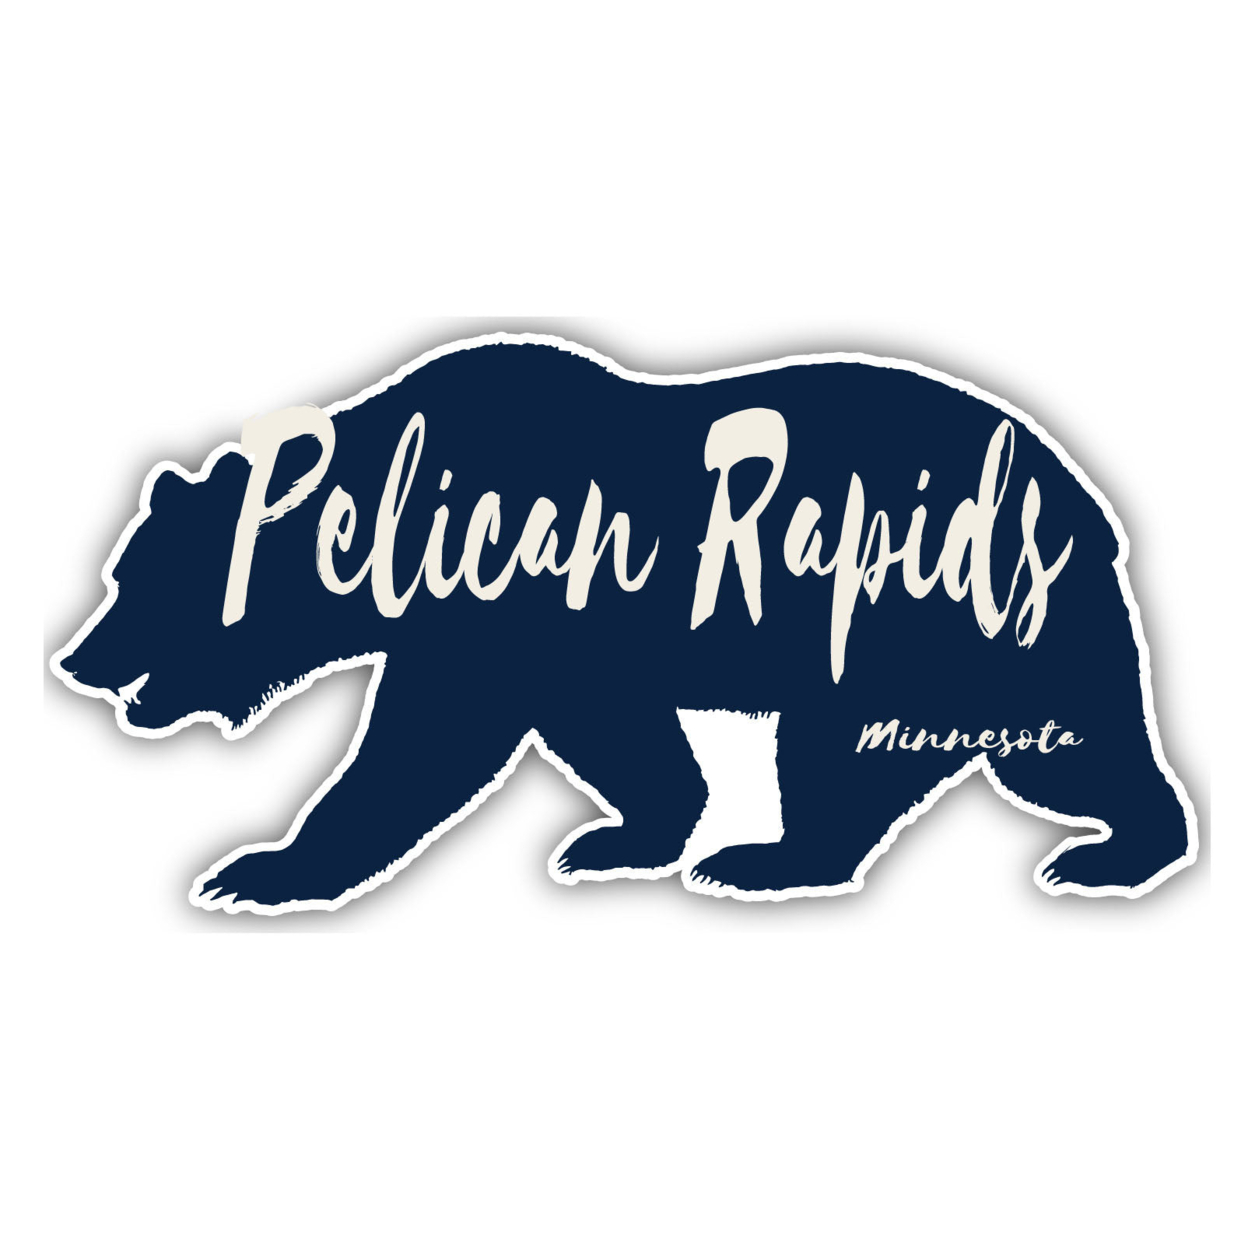 Pelican Rapids Minnesota Souvenir Decorative Stickers (Choose Theme And Size) - Single Unit, 4-Inch, Bear